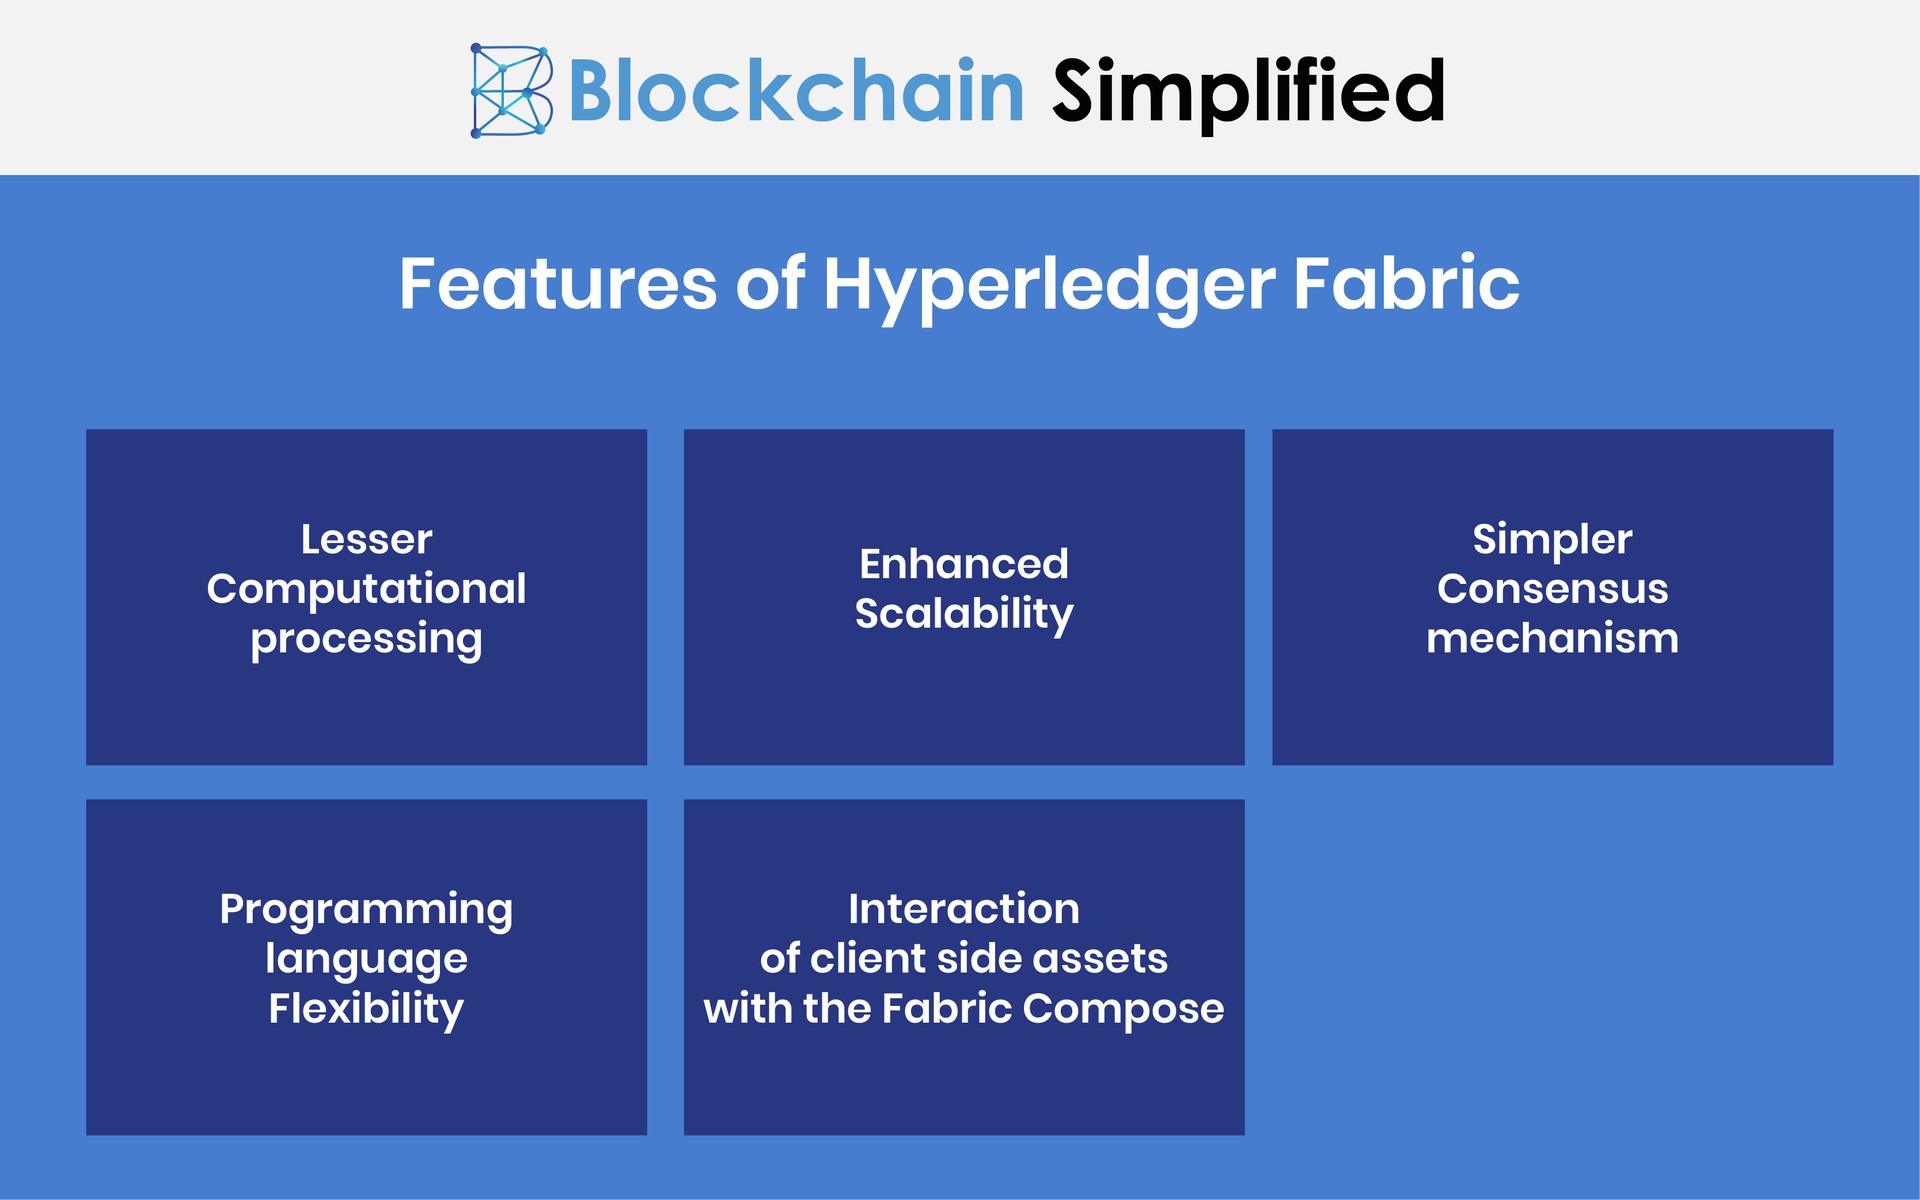 Hyperledger Fabric features